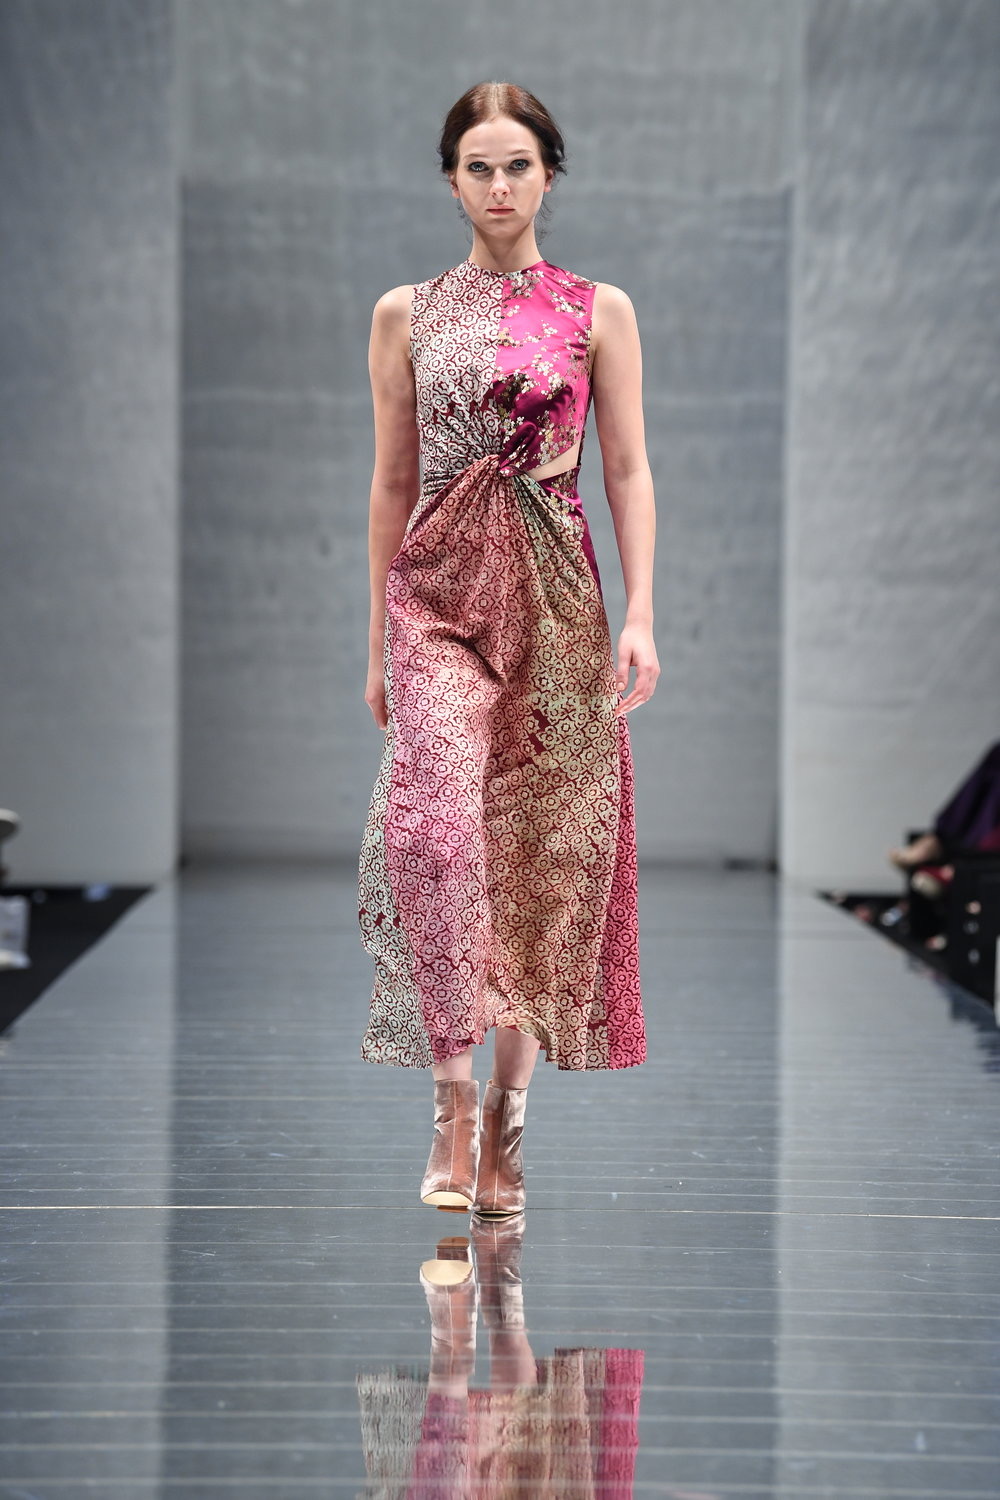 Model gaun batik colourfull